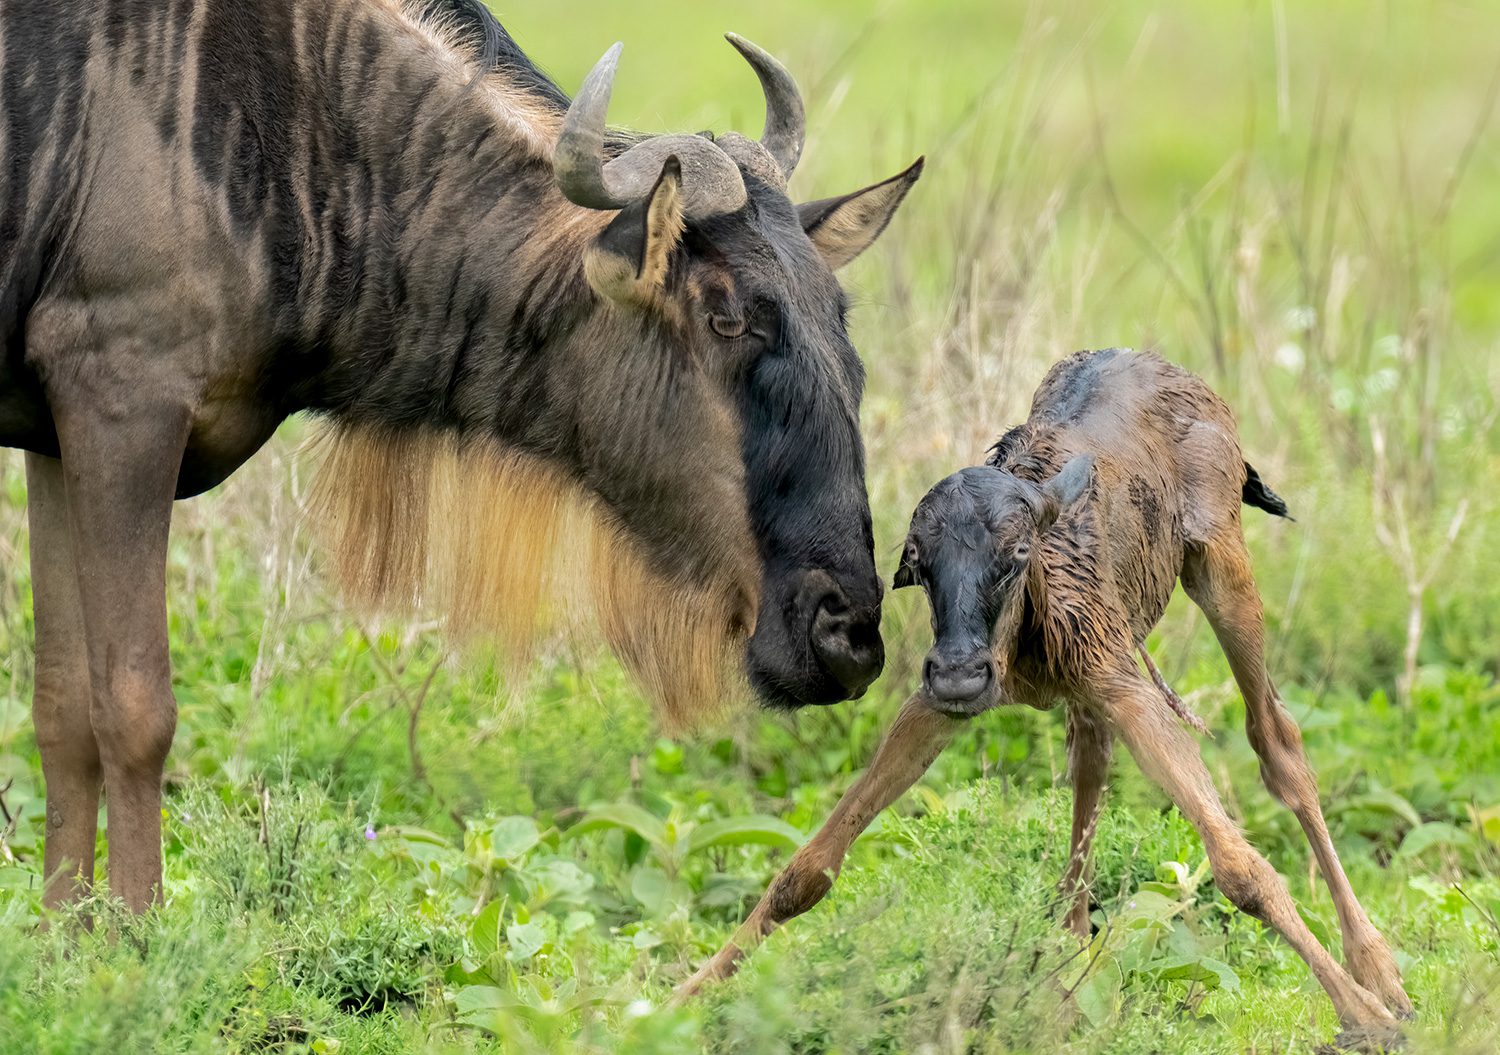 newborn wildebeest calf learning to stand